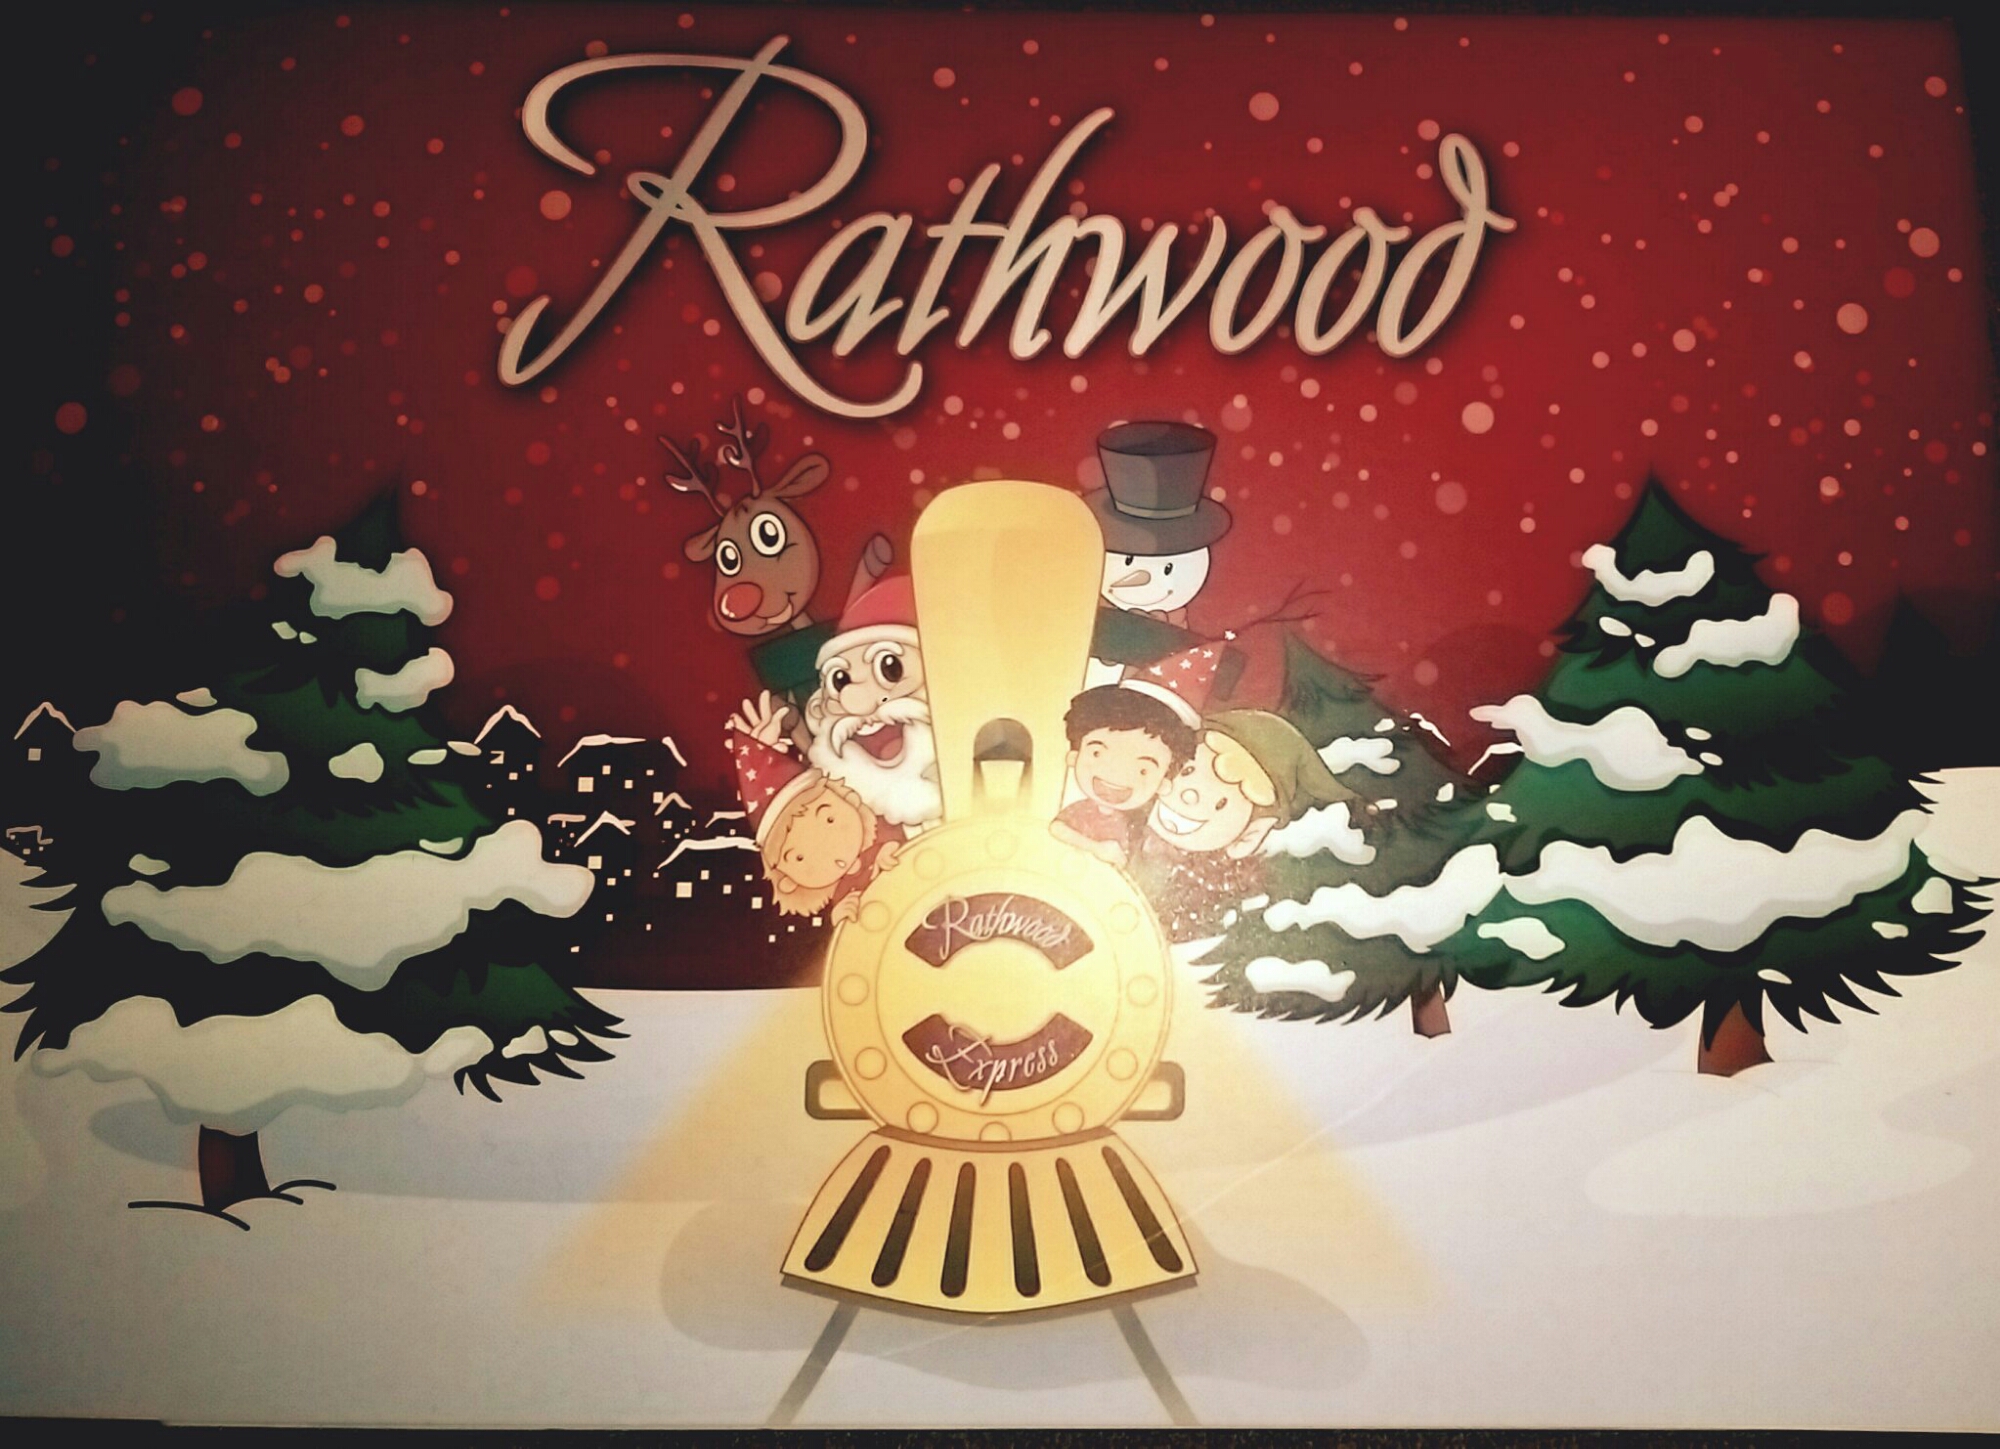 The Santa Experience – Rathwood